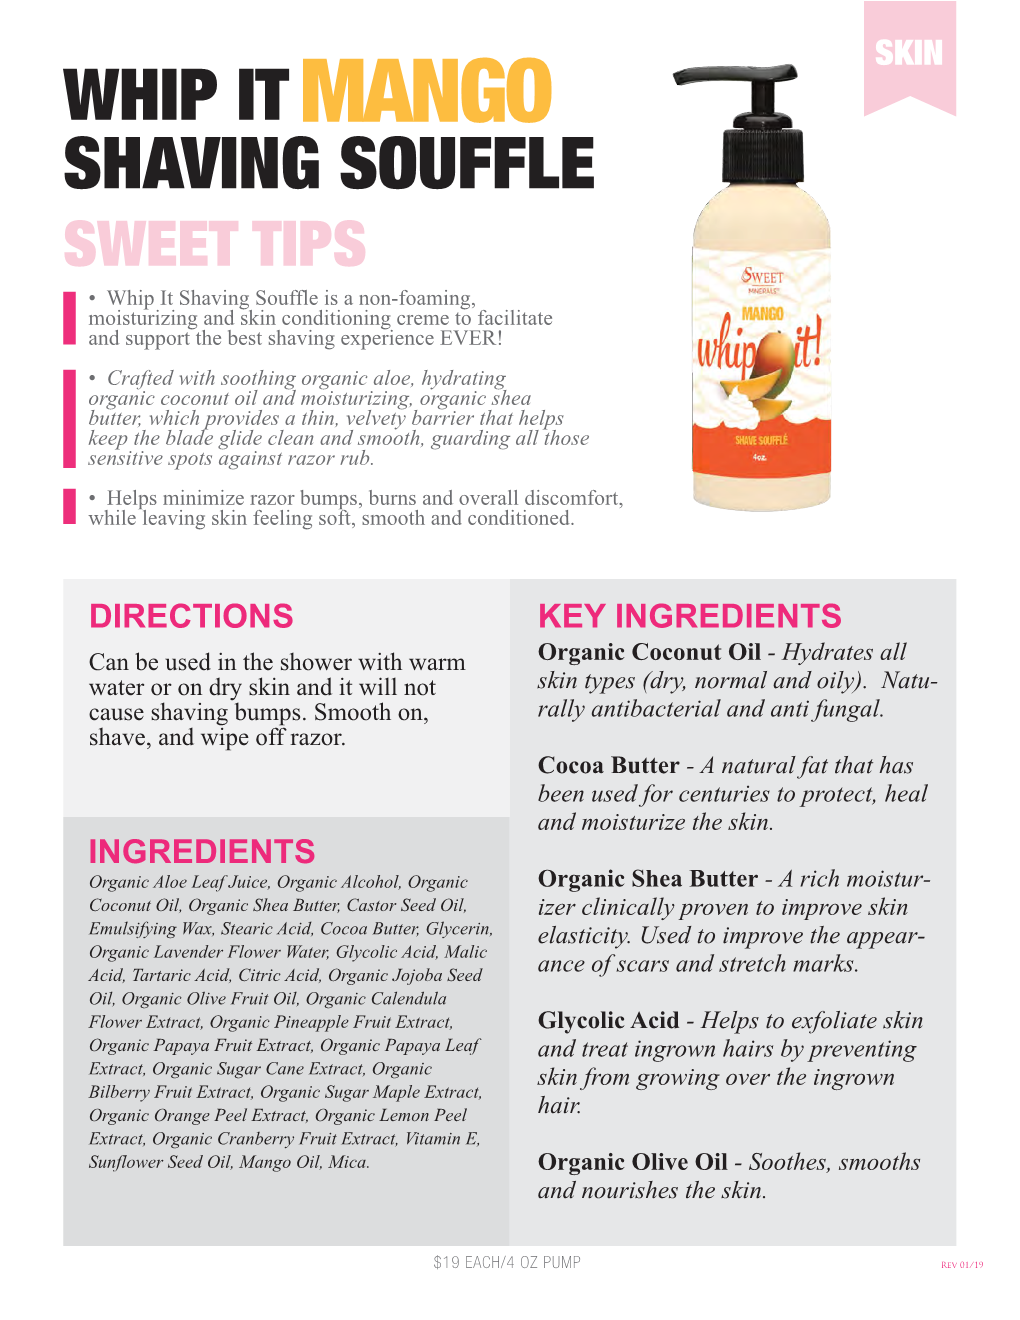 Sweet Productknowbook Skin WHIP IT MANGO Shave